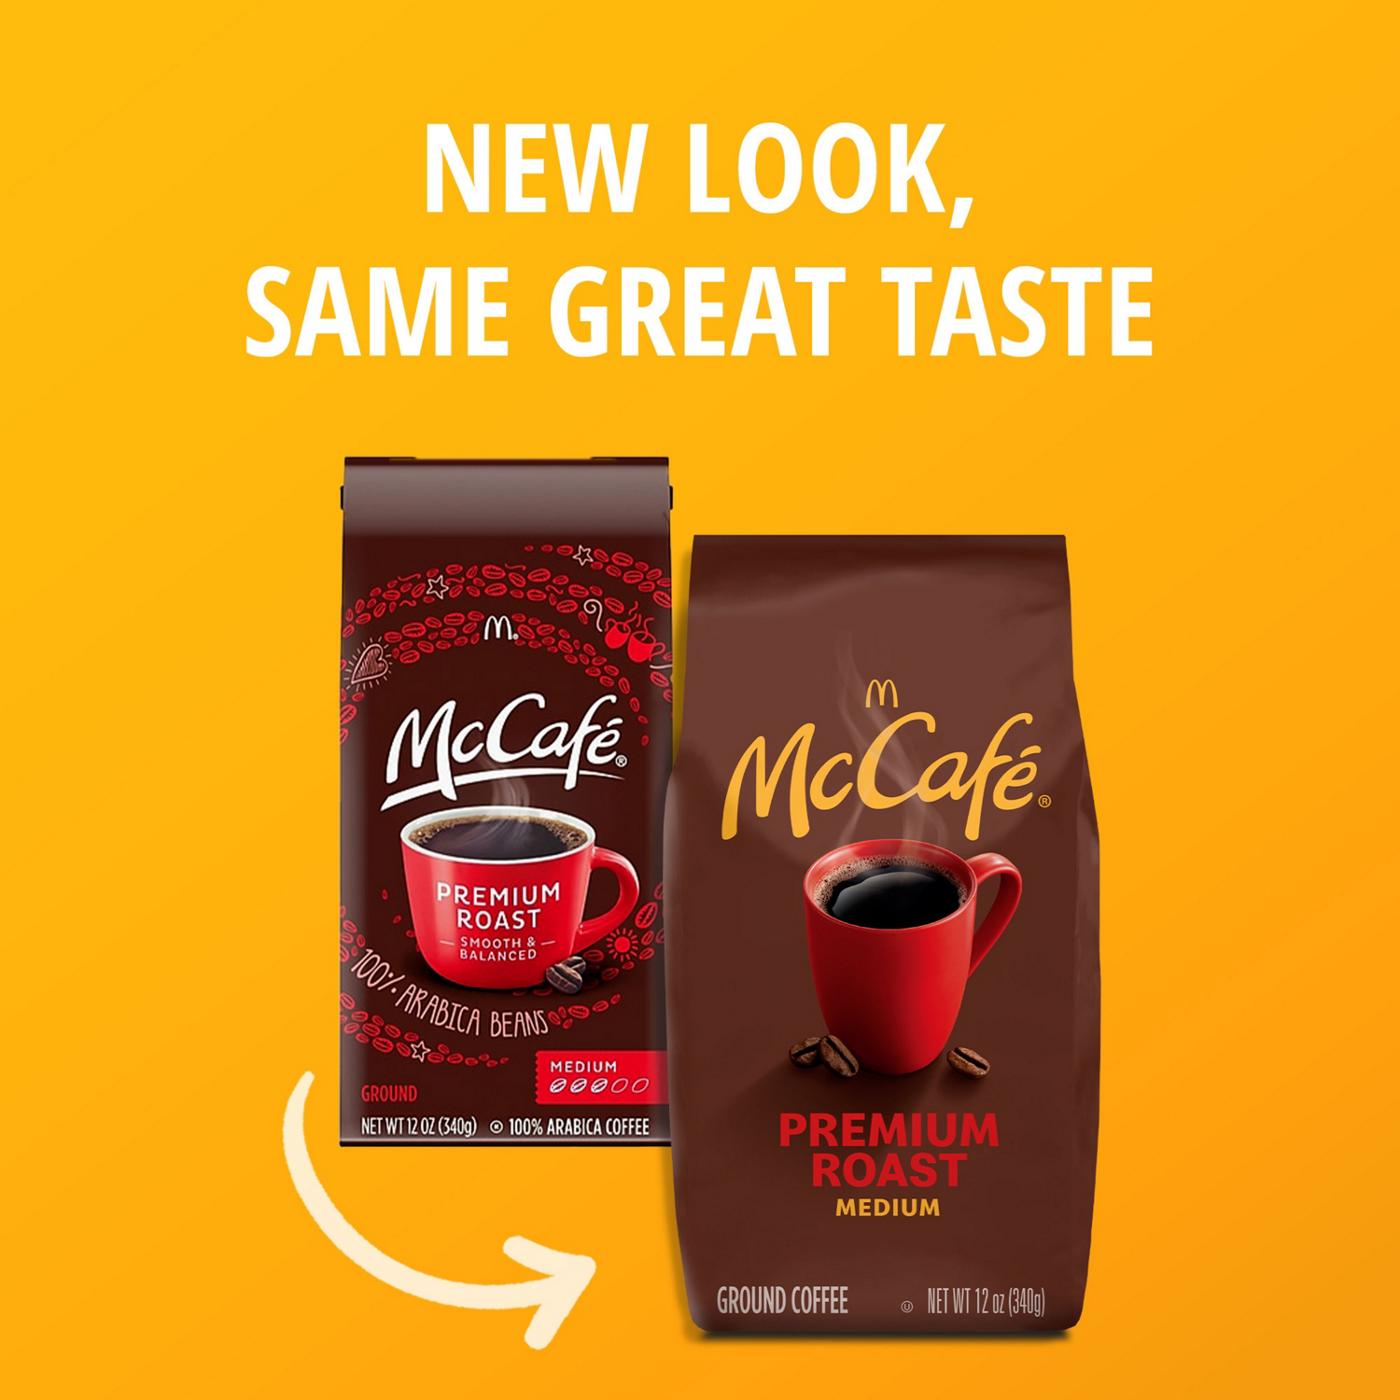 McCafe Premium Roast Medium Ground Coffee; image 4 of 7